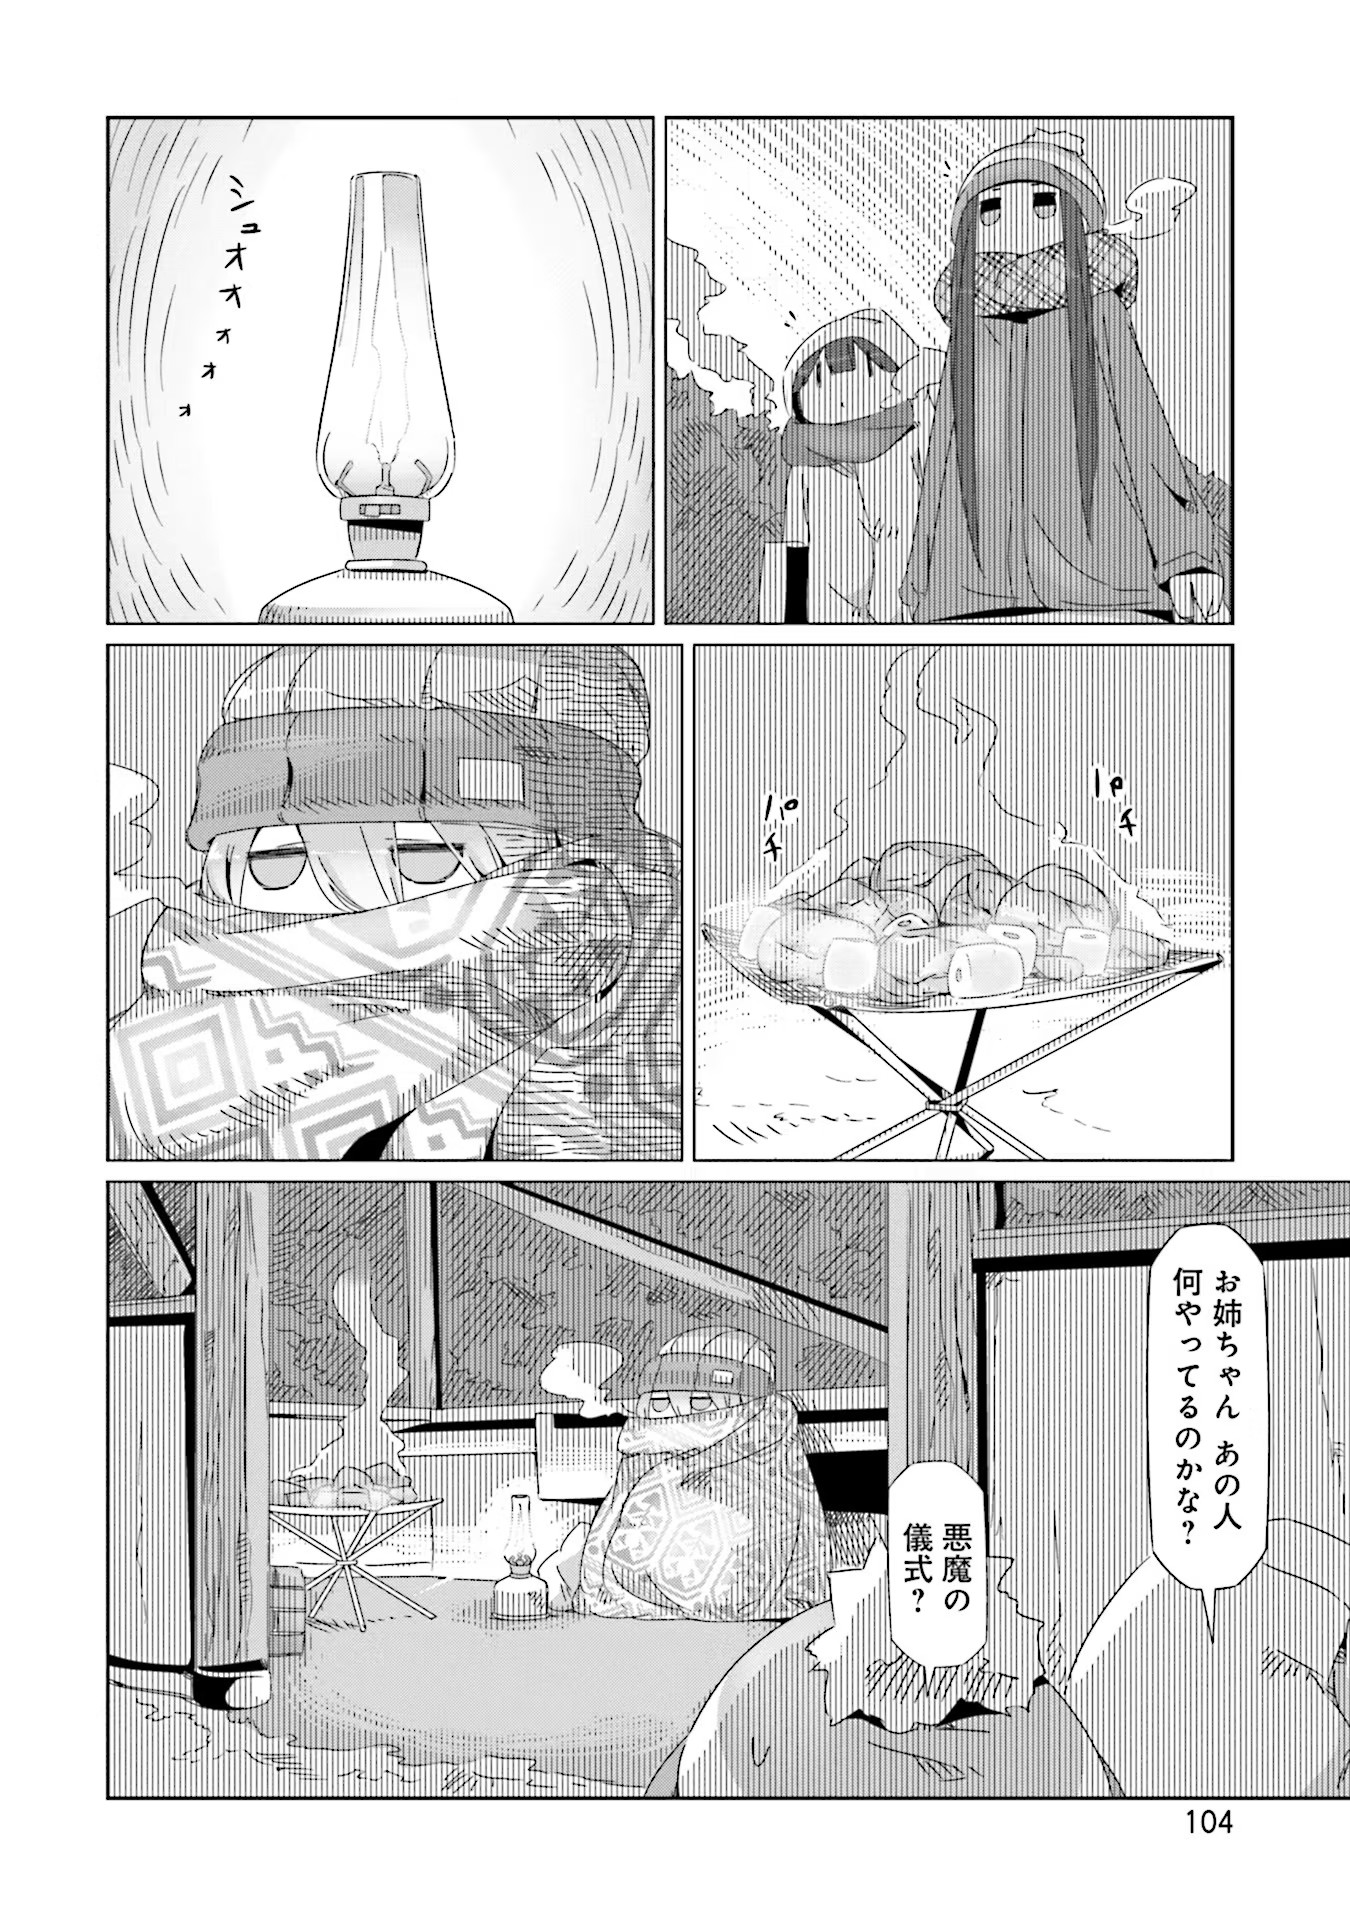 Yuru Camp - Chapter 38 - Page 24